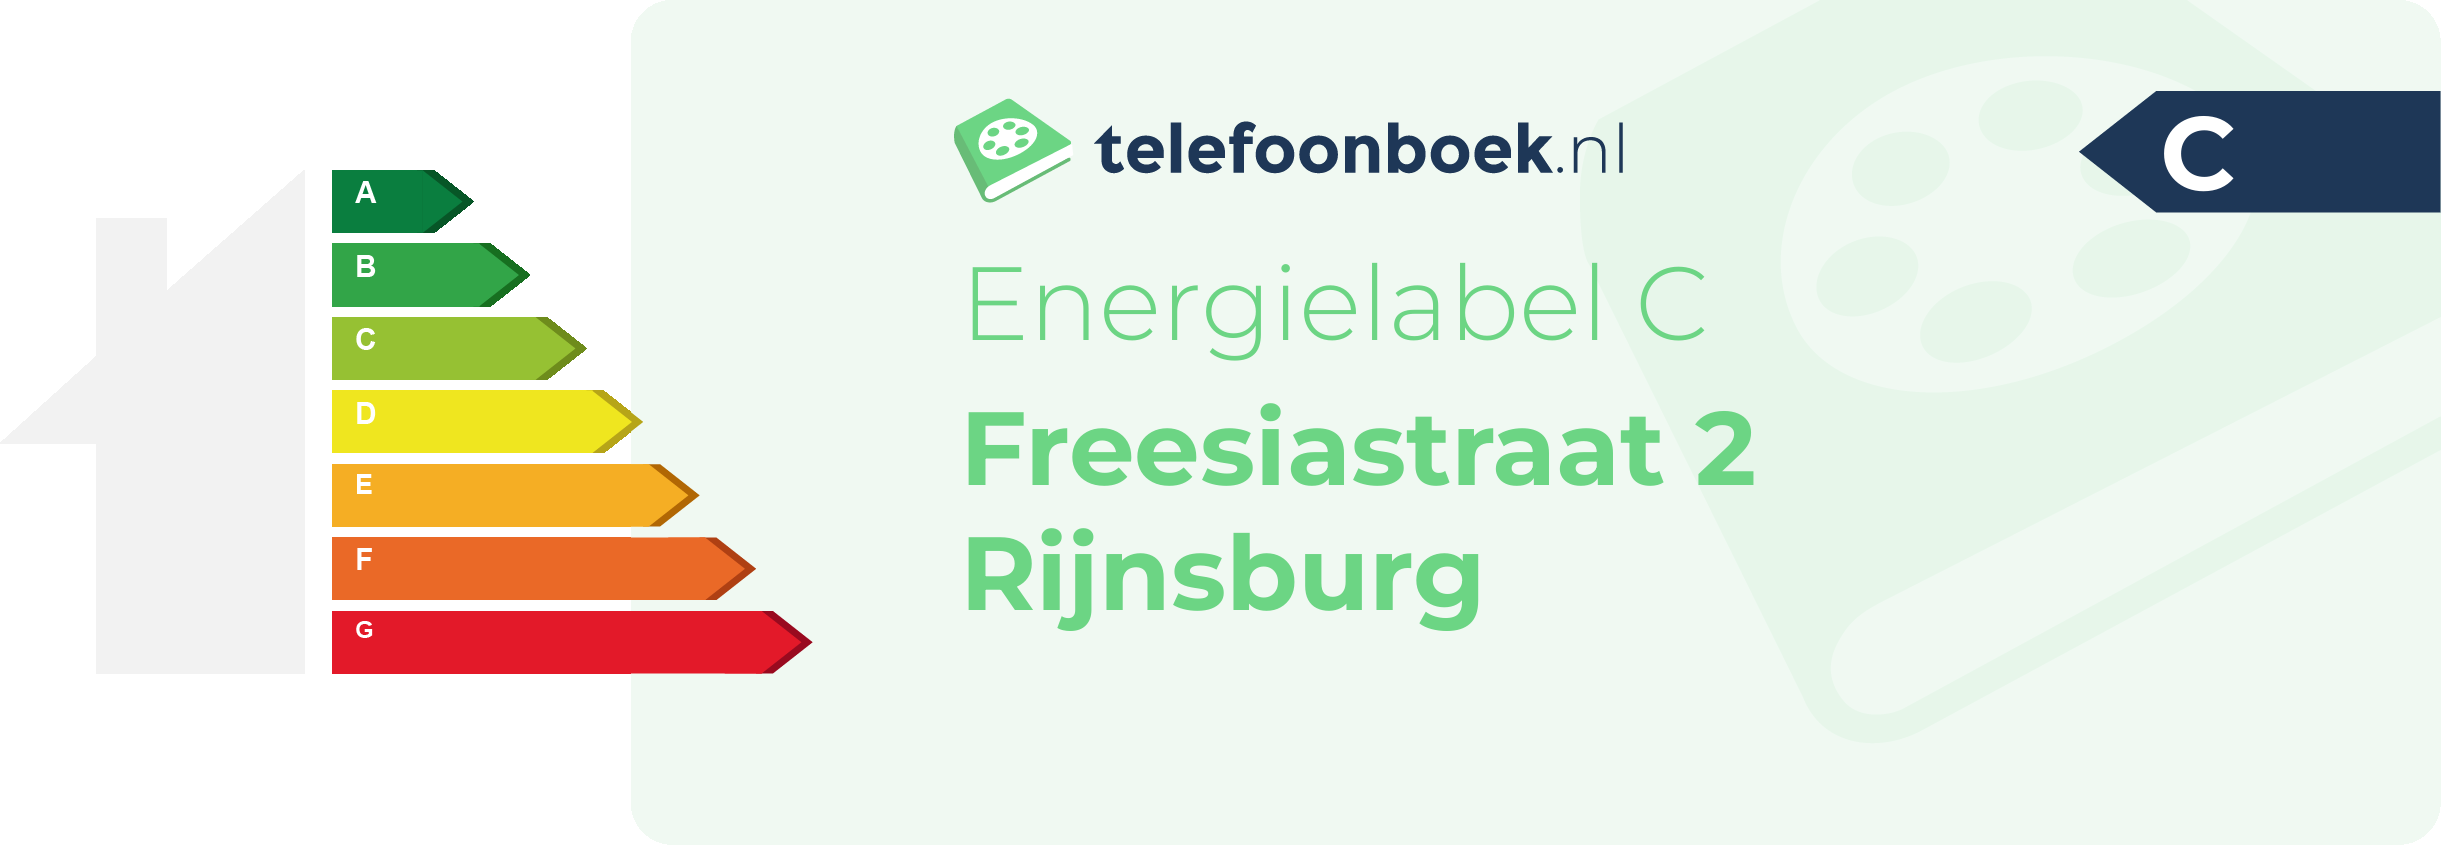 Energielabel Freesiastraat 2 Rijnsburg